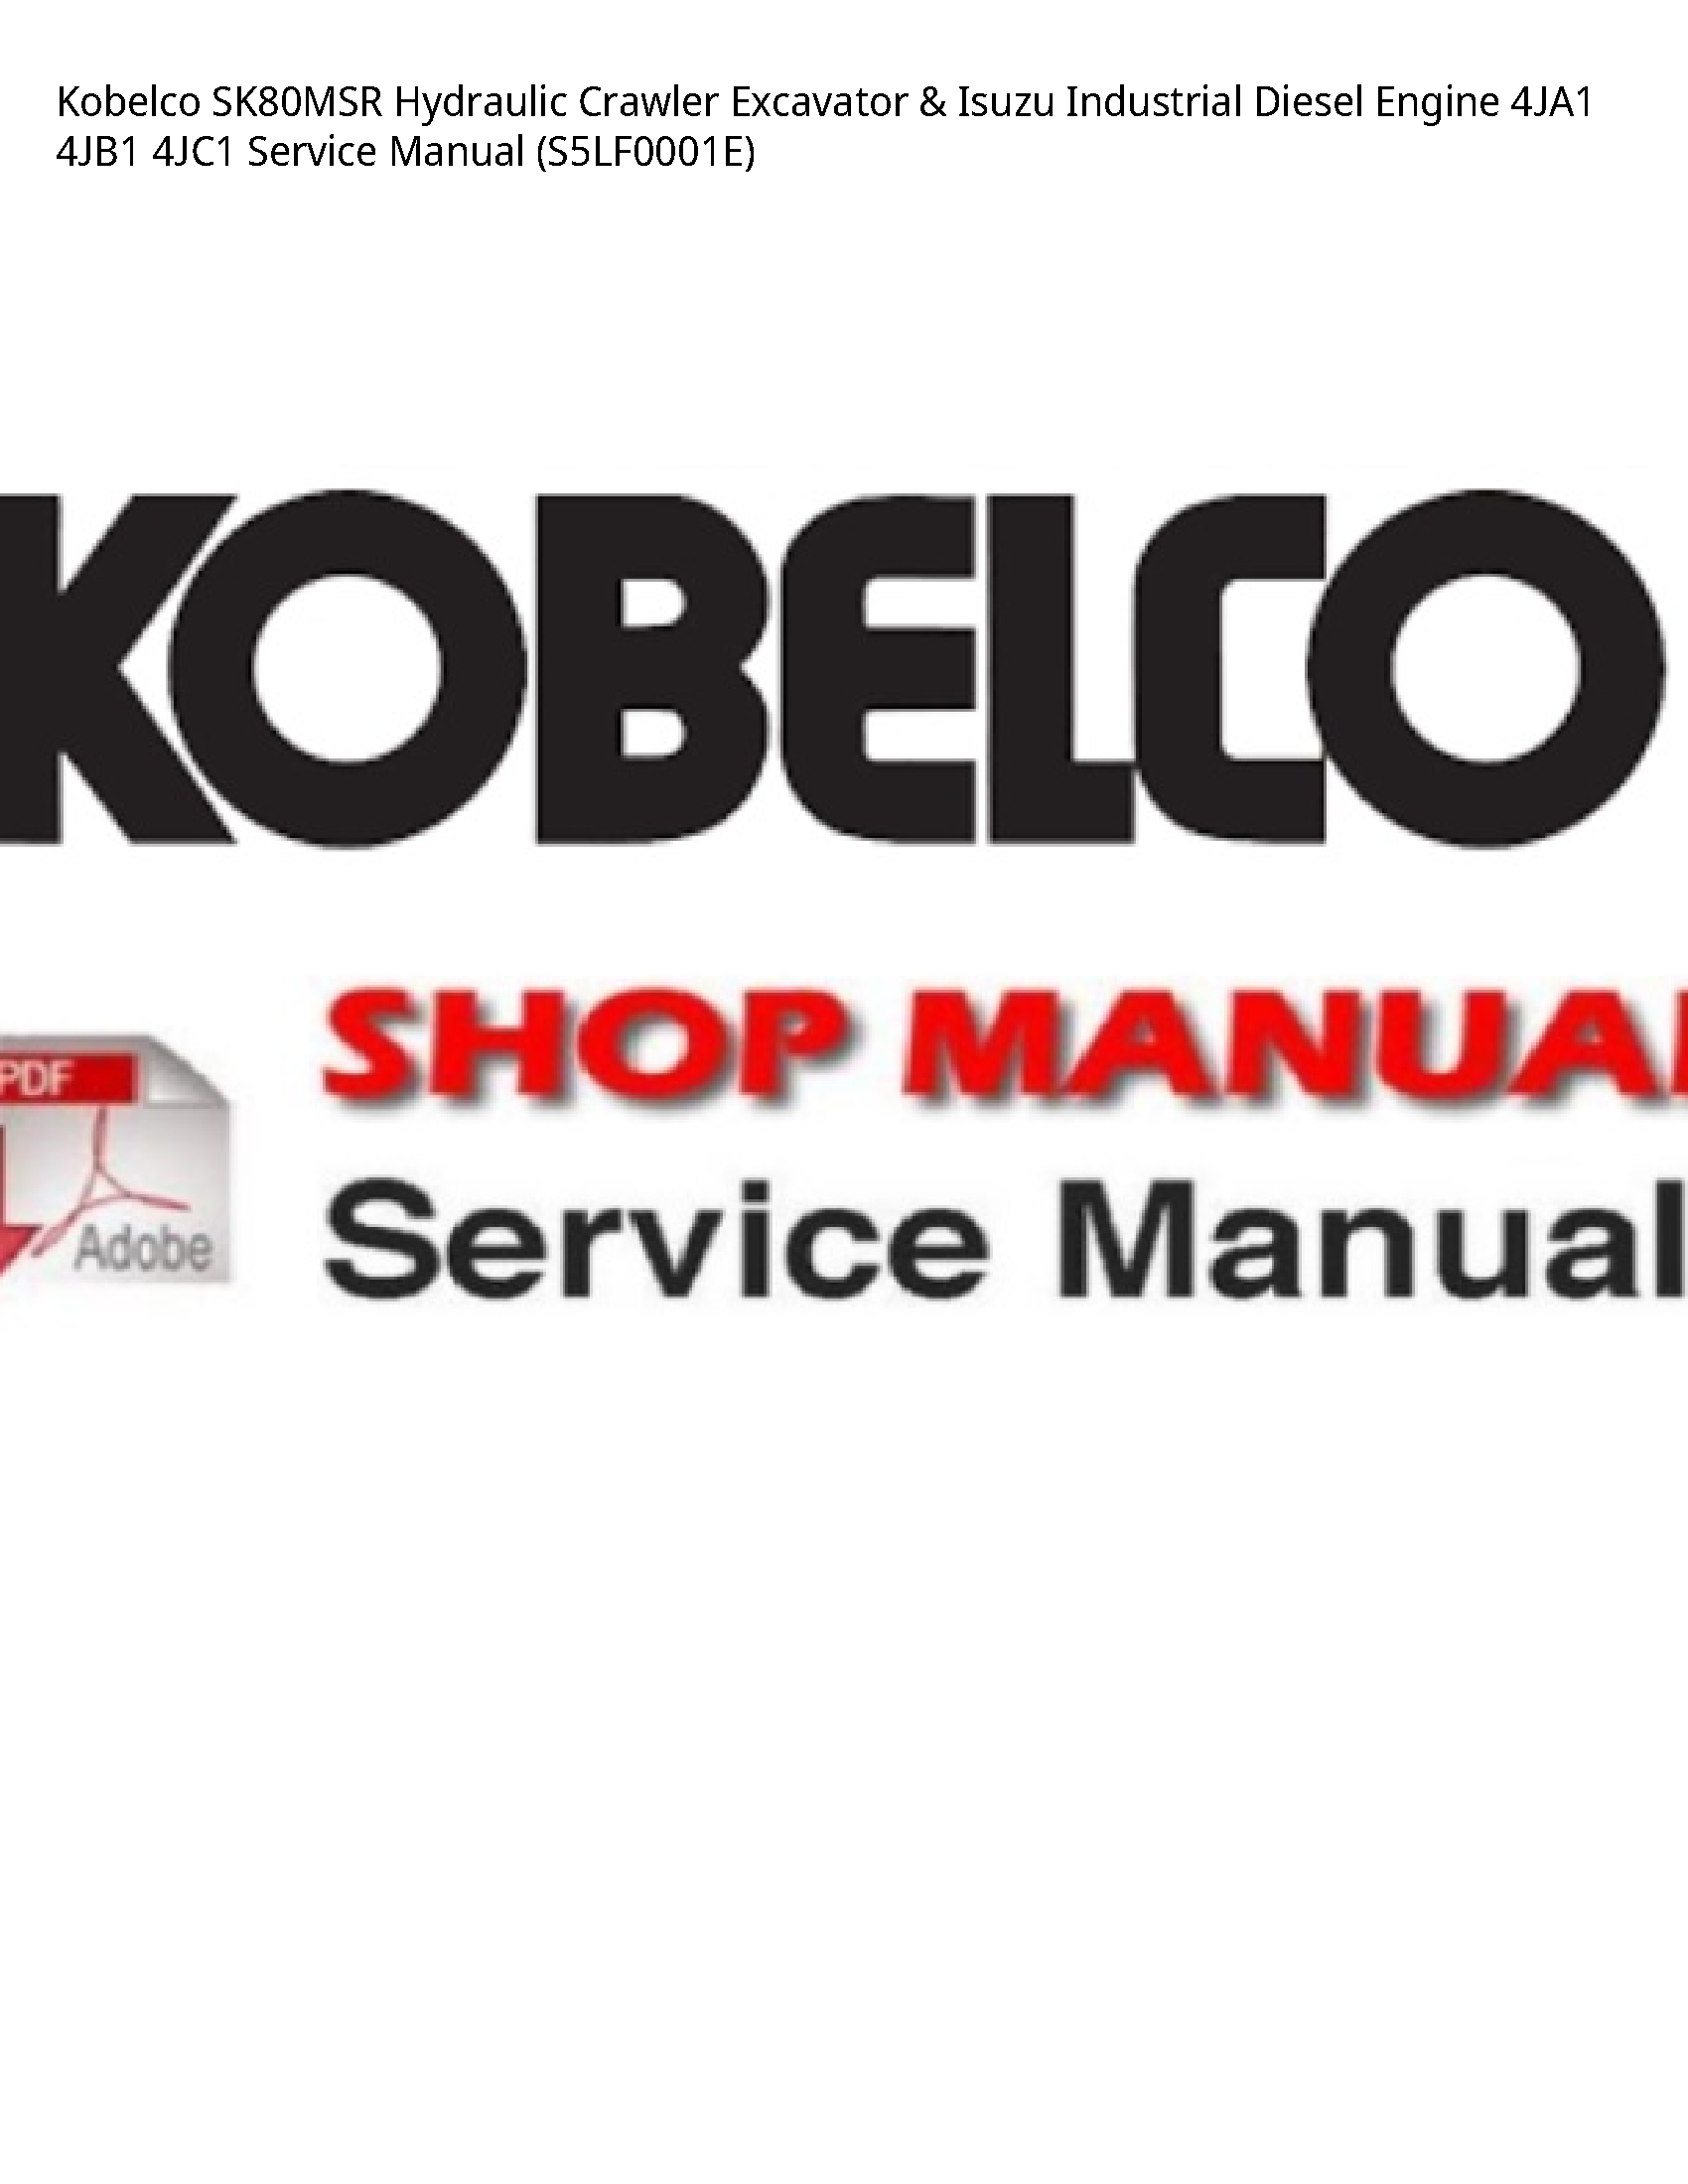 Kobelco SK80MSR Hydraulic Crawler Excavator Isuzu Industrial Diesel Engine Service manual